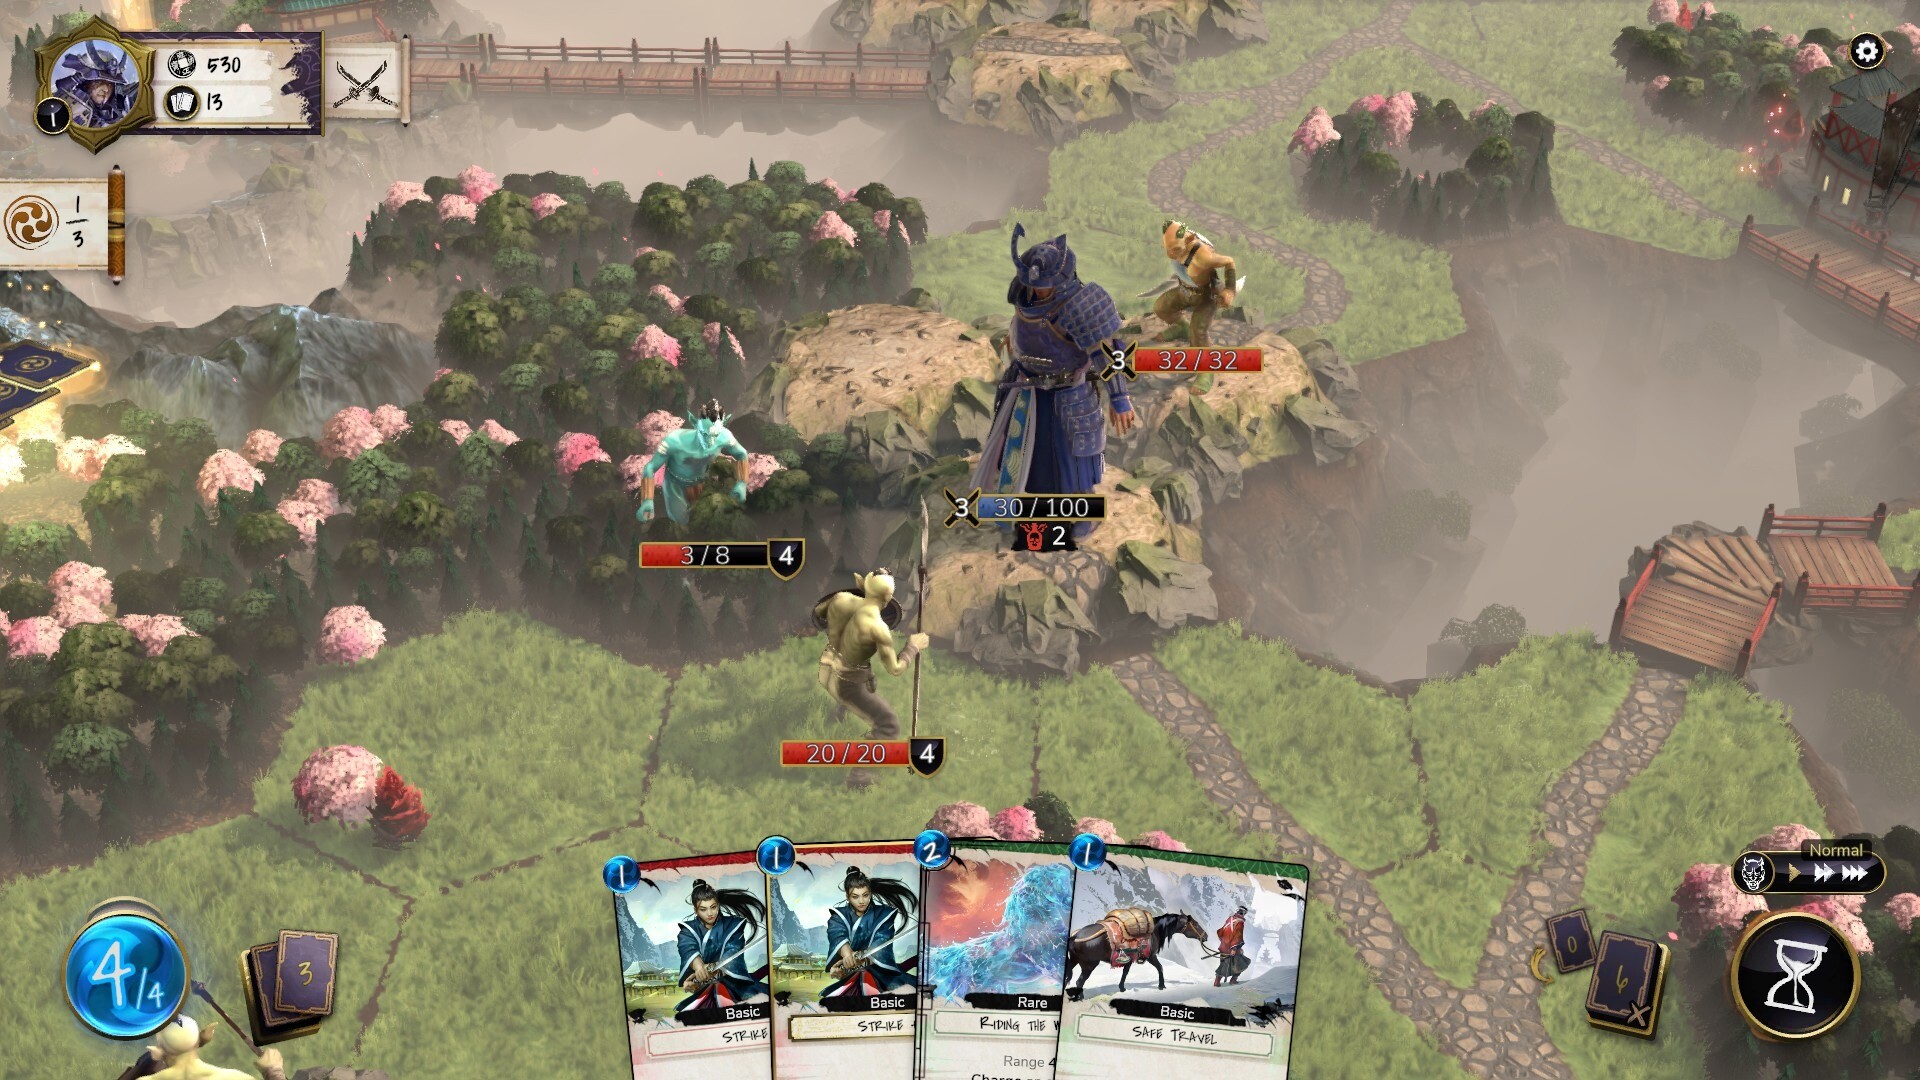 Mahokenshi game screenshot, surrounded by enemies